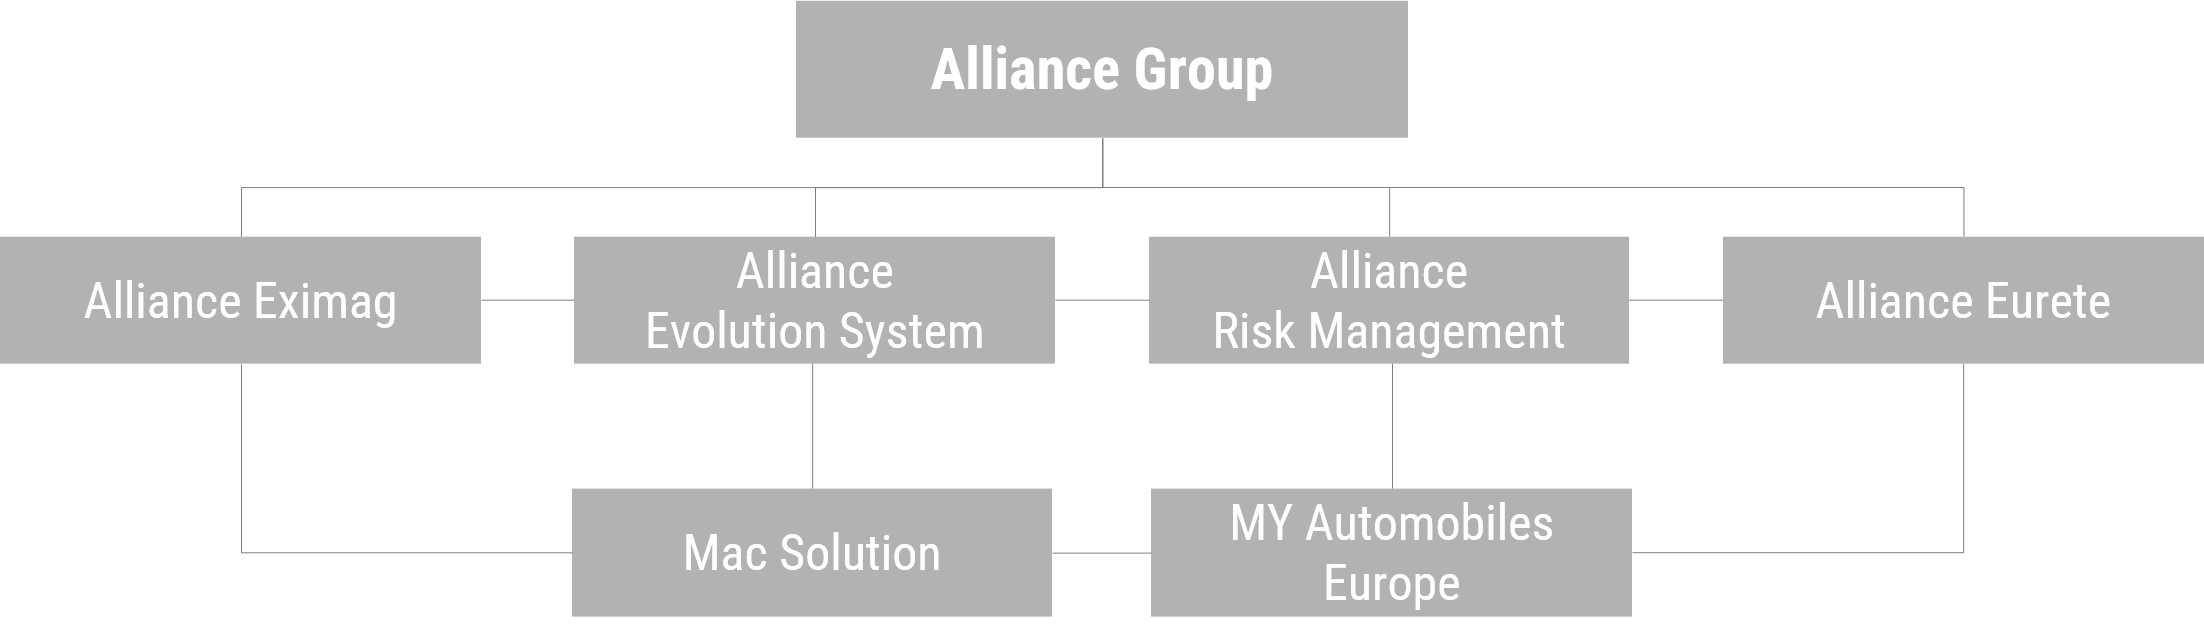 Alliance Group_struttura socetaria